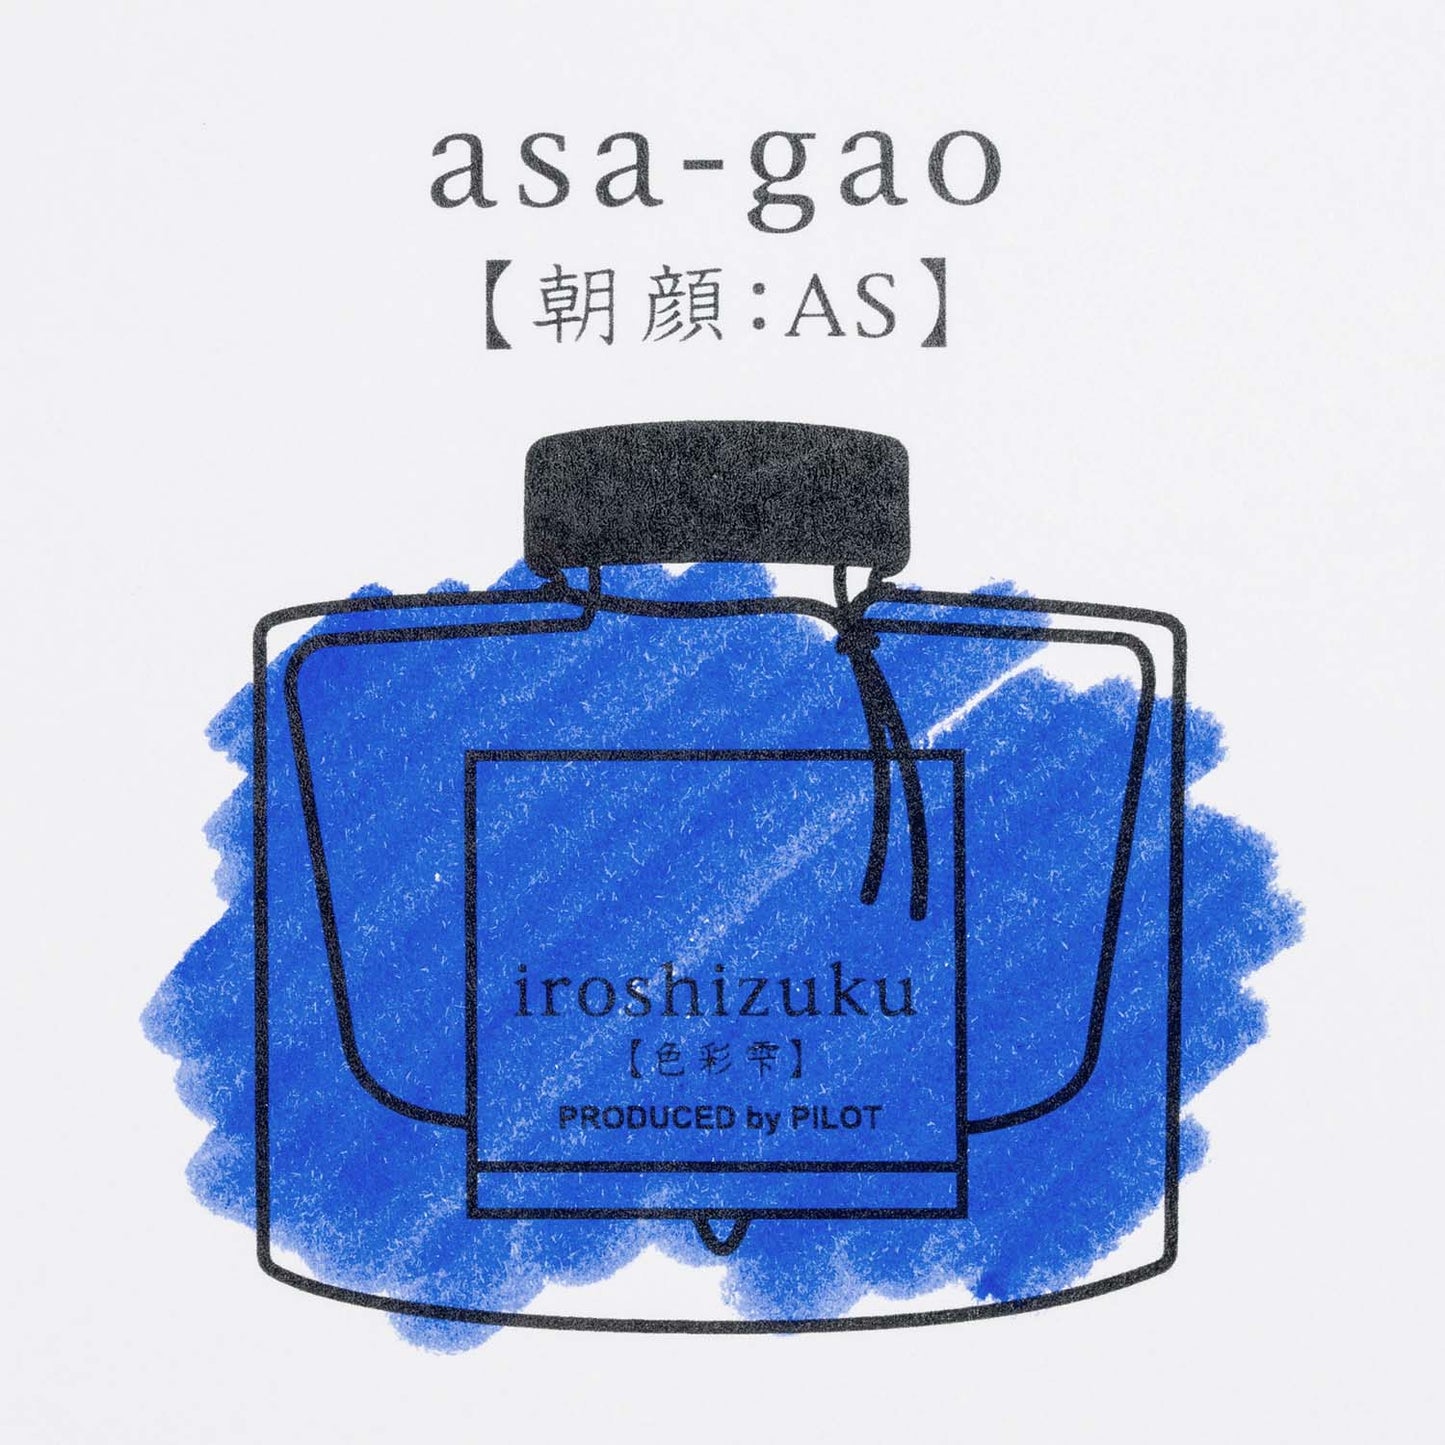 Pilot Iroshizuku Fountain Pen Ink - Asa-gao (Morning Glory) Blue Sample